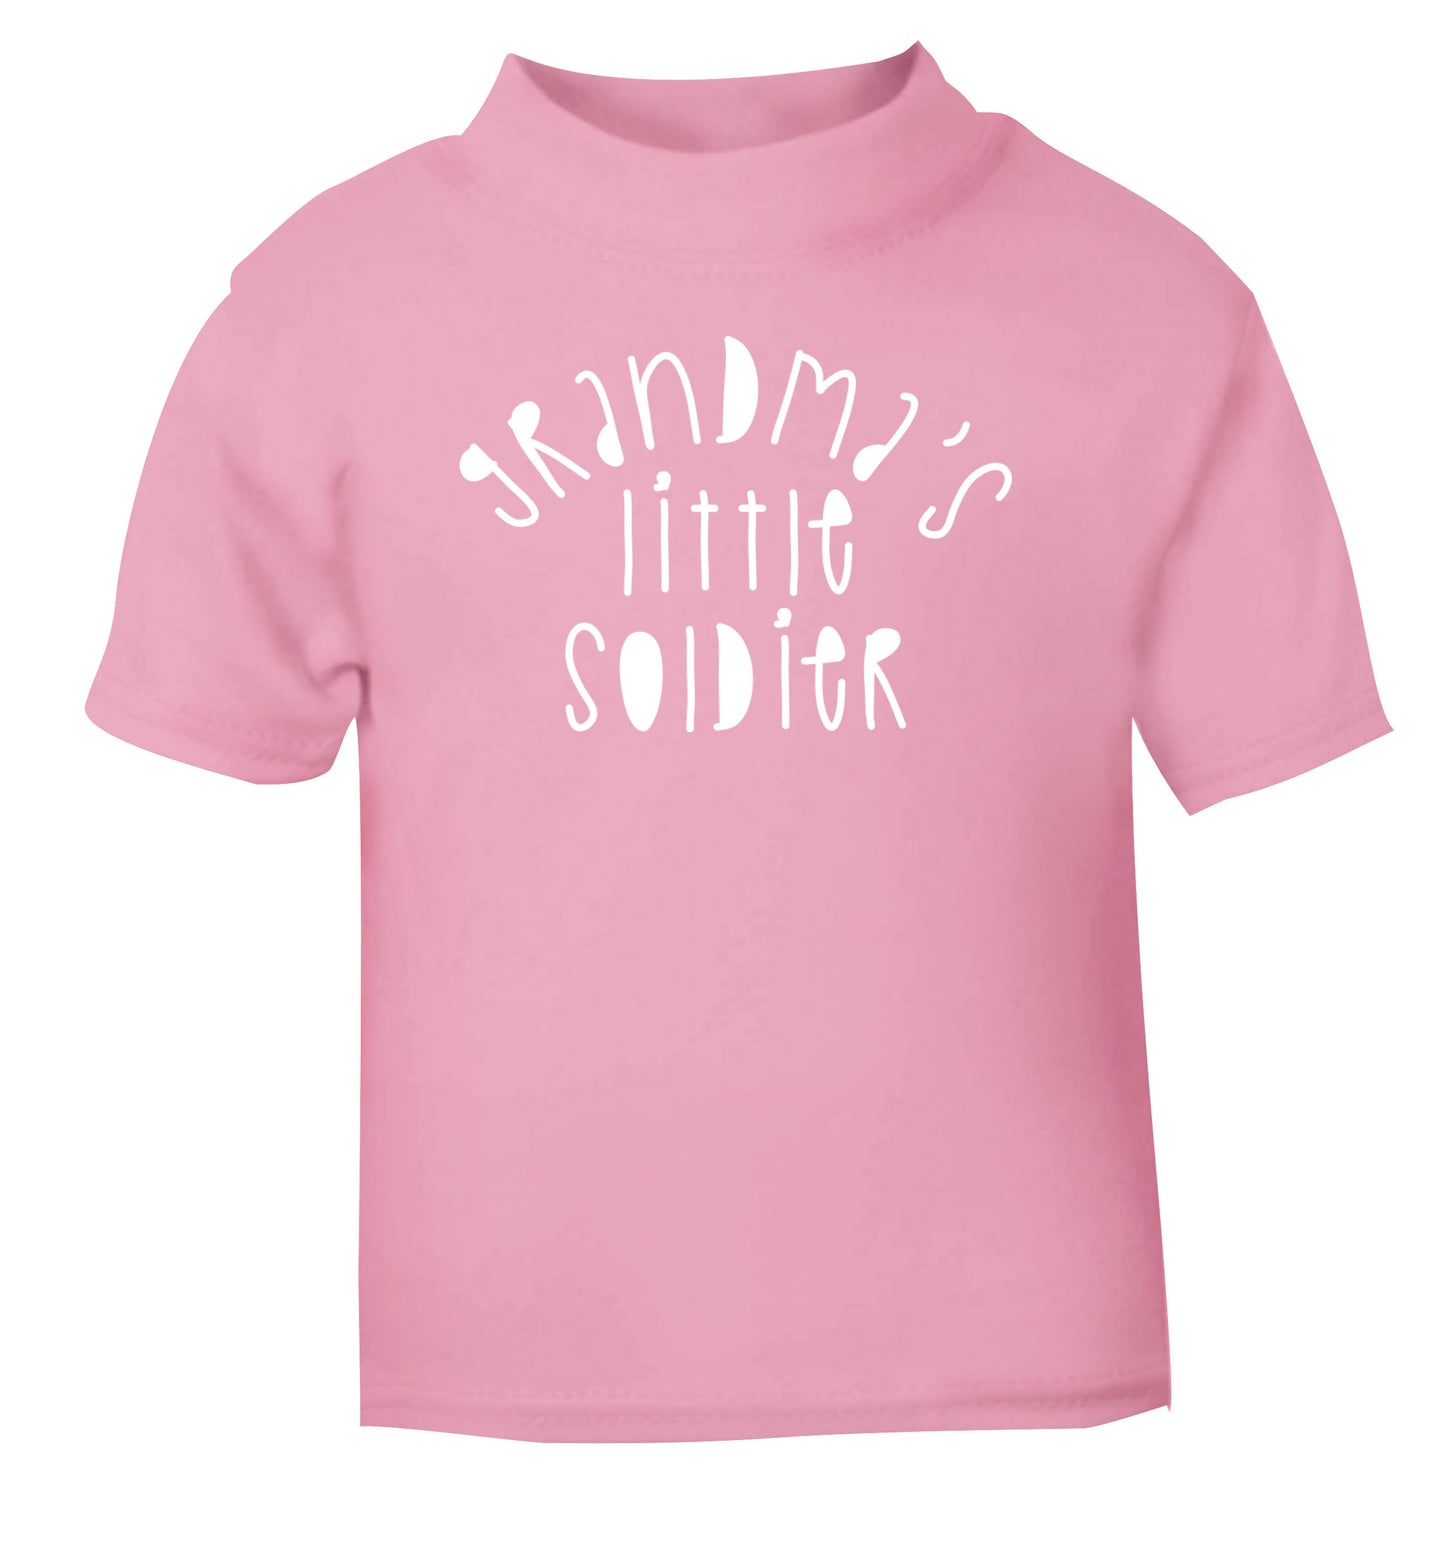 Grandma's little soldier light pink Baby Toddler Tshirt 2 Years